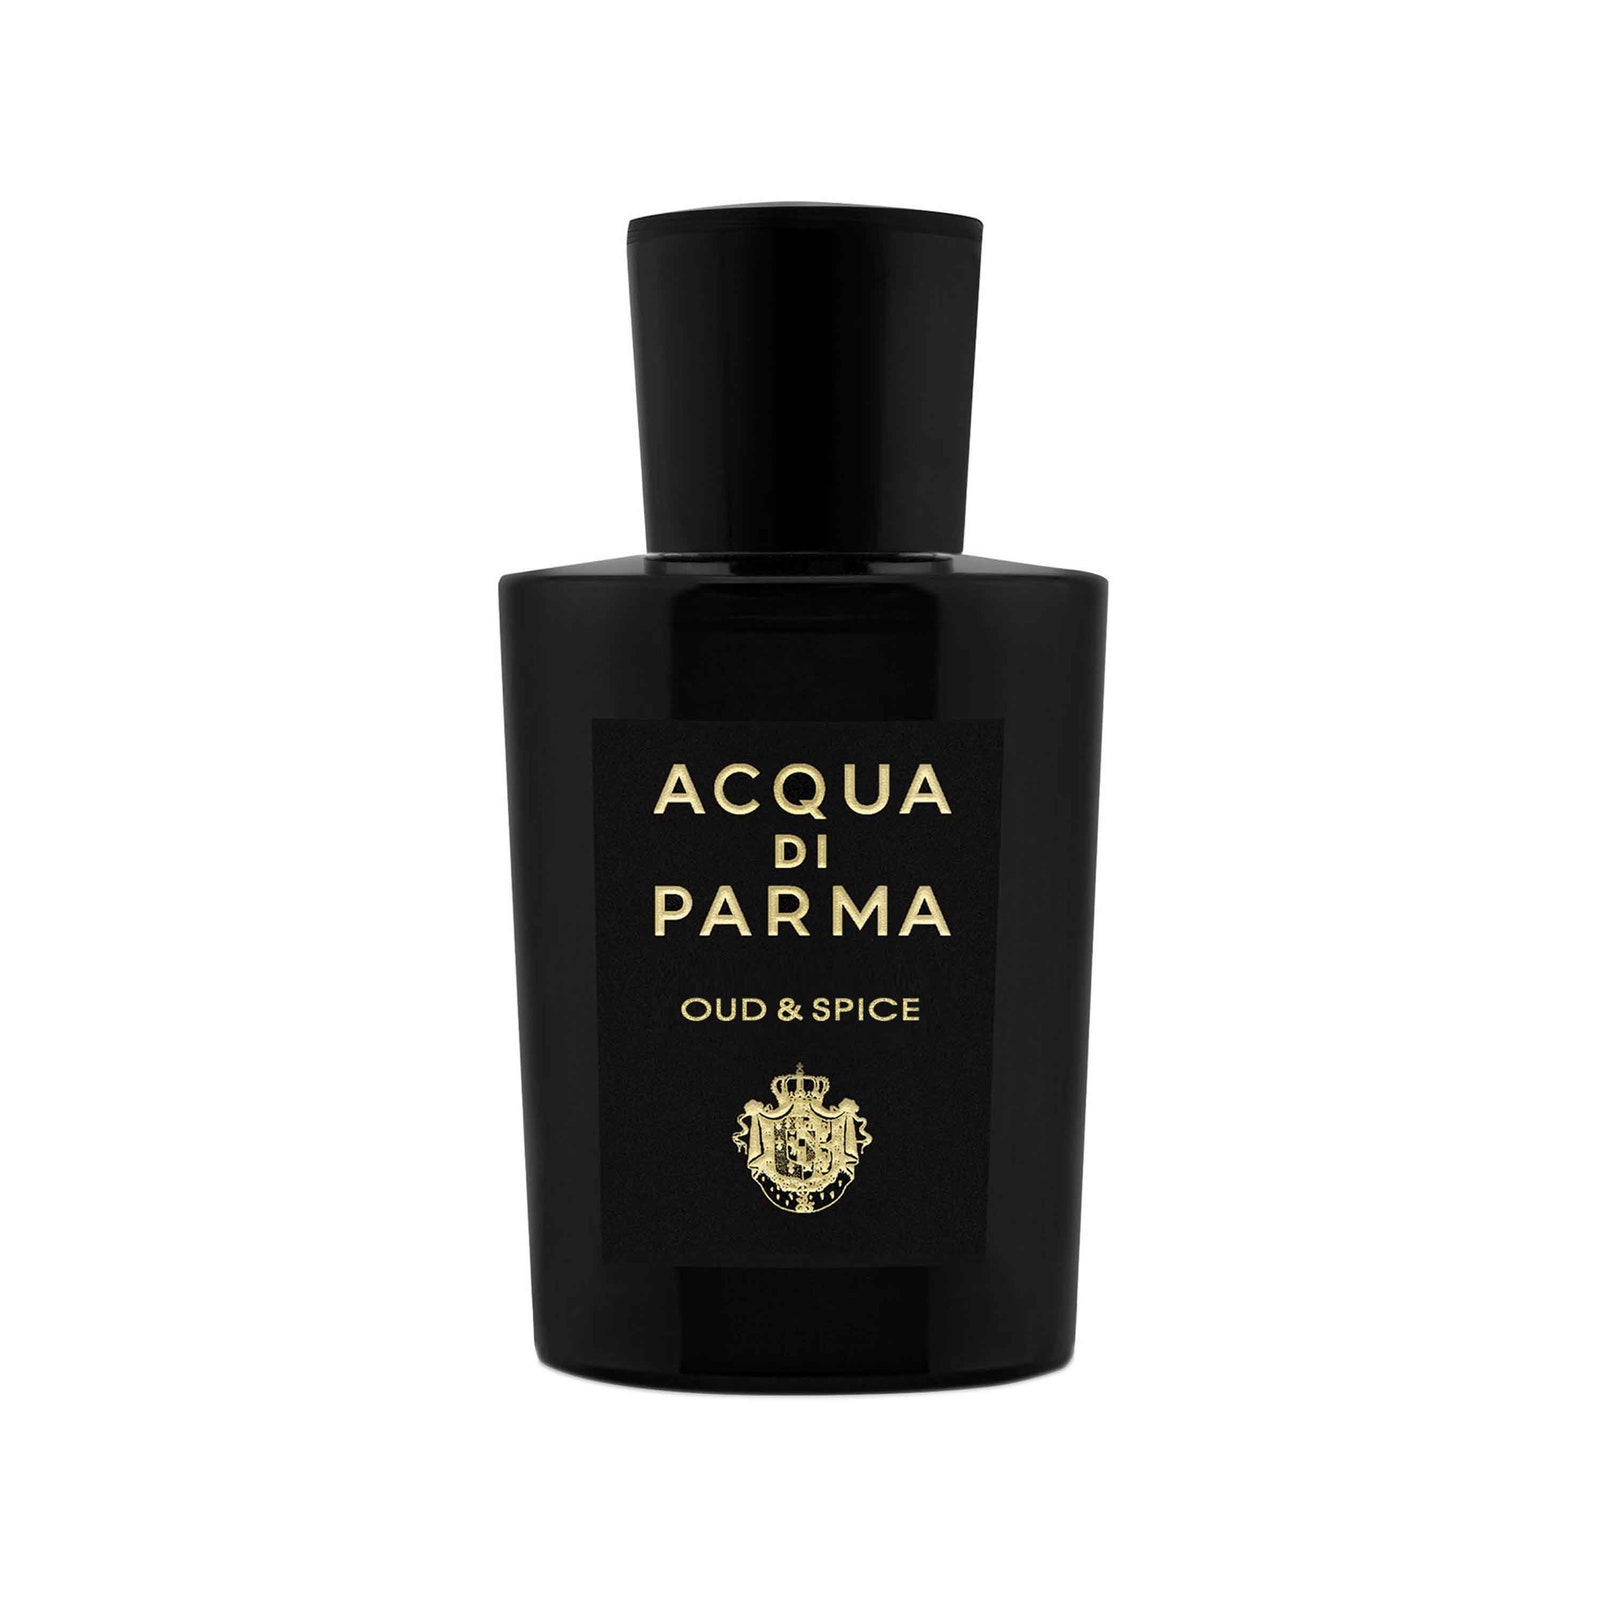 Perfume de Acqua Di Parma